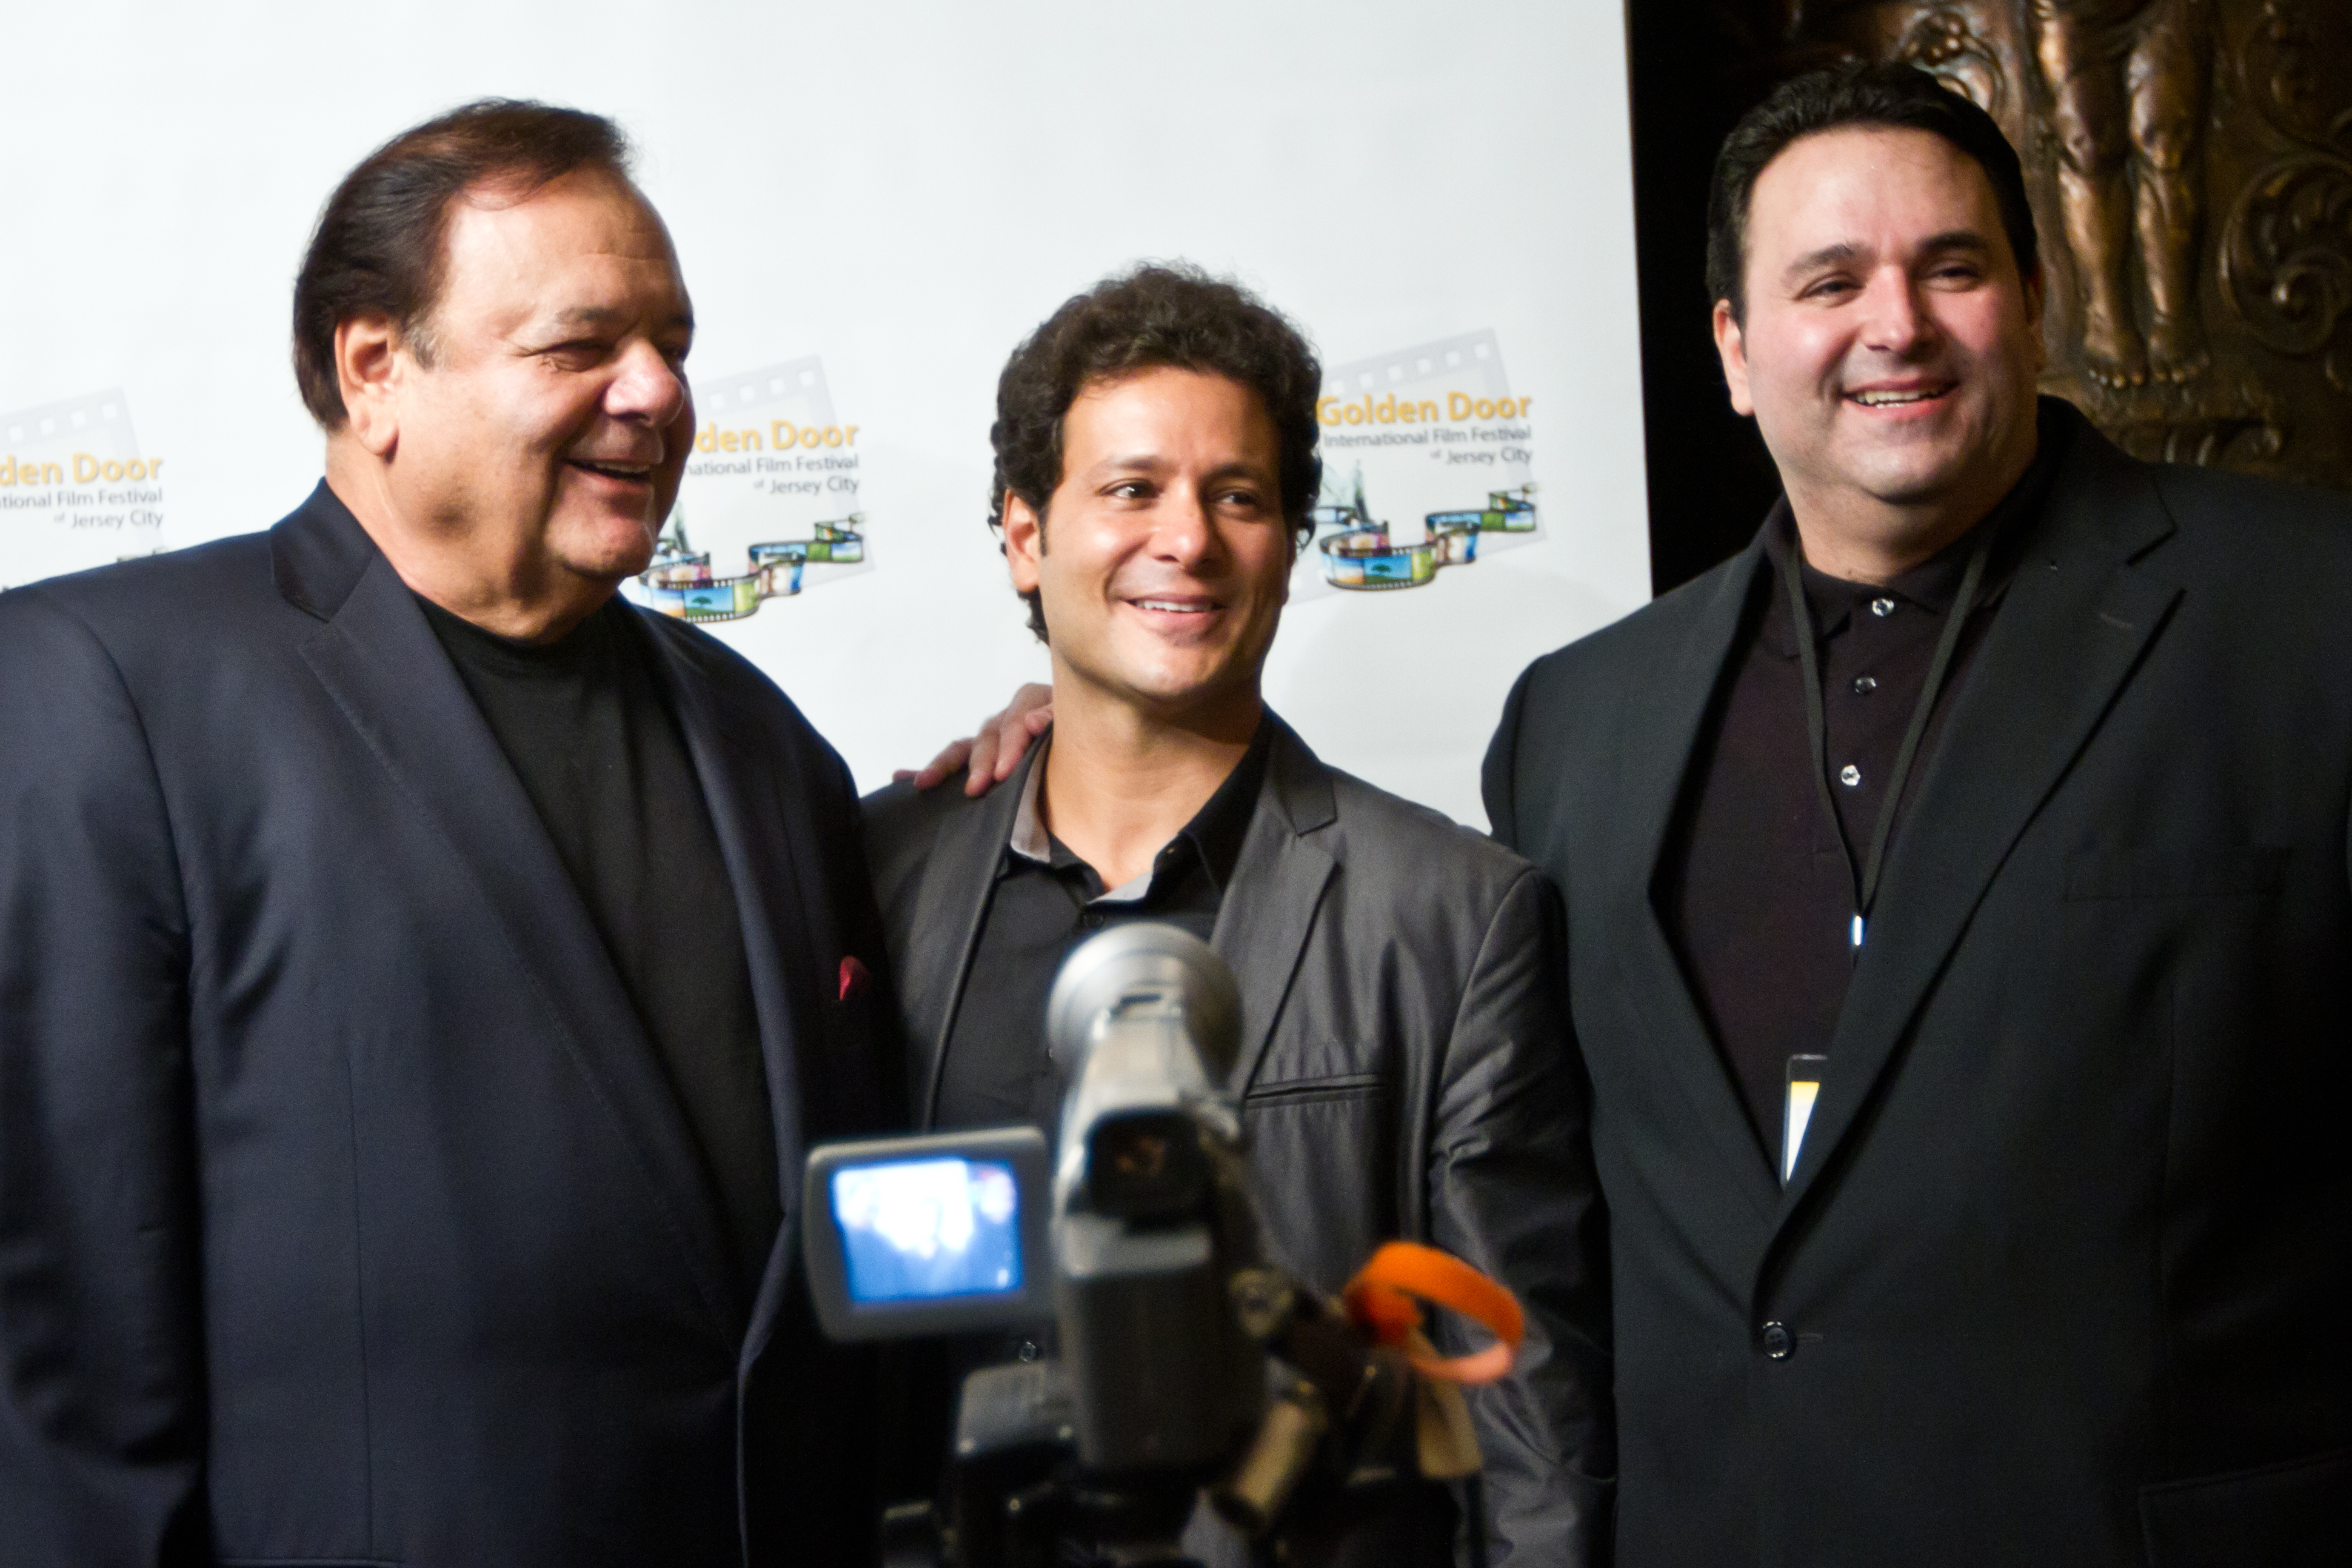 Sam Borowski (R) poses on red carpet w/ Festival Director Bill Sorvino and legendary actor Paul Sorvino (L) at 2011 GOLDEN DOOR INTERNATIONAL FILM FESTIVAL OF JERSEY CITY. Borowski's NIGHT CLUB won 5 awards, including Best Director, Best Feature.